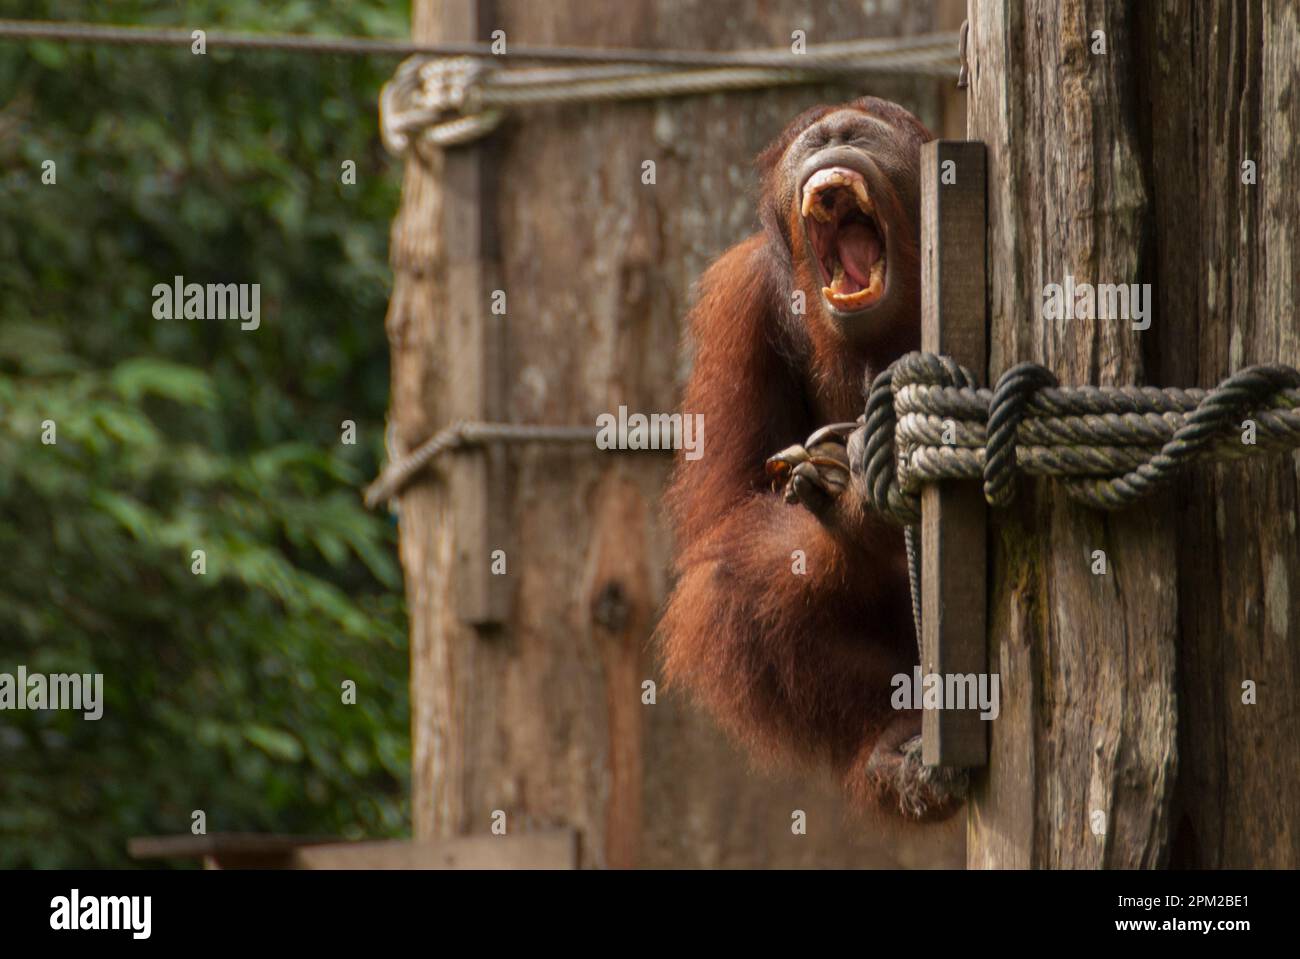 Orangutan, Pongo pygmaeus, baring teeth on side of feeding platform, Sepilok Orangutan Rehabilitation Centre,  Sepilok National Park, Sandakan, Sabah, Stock Photo